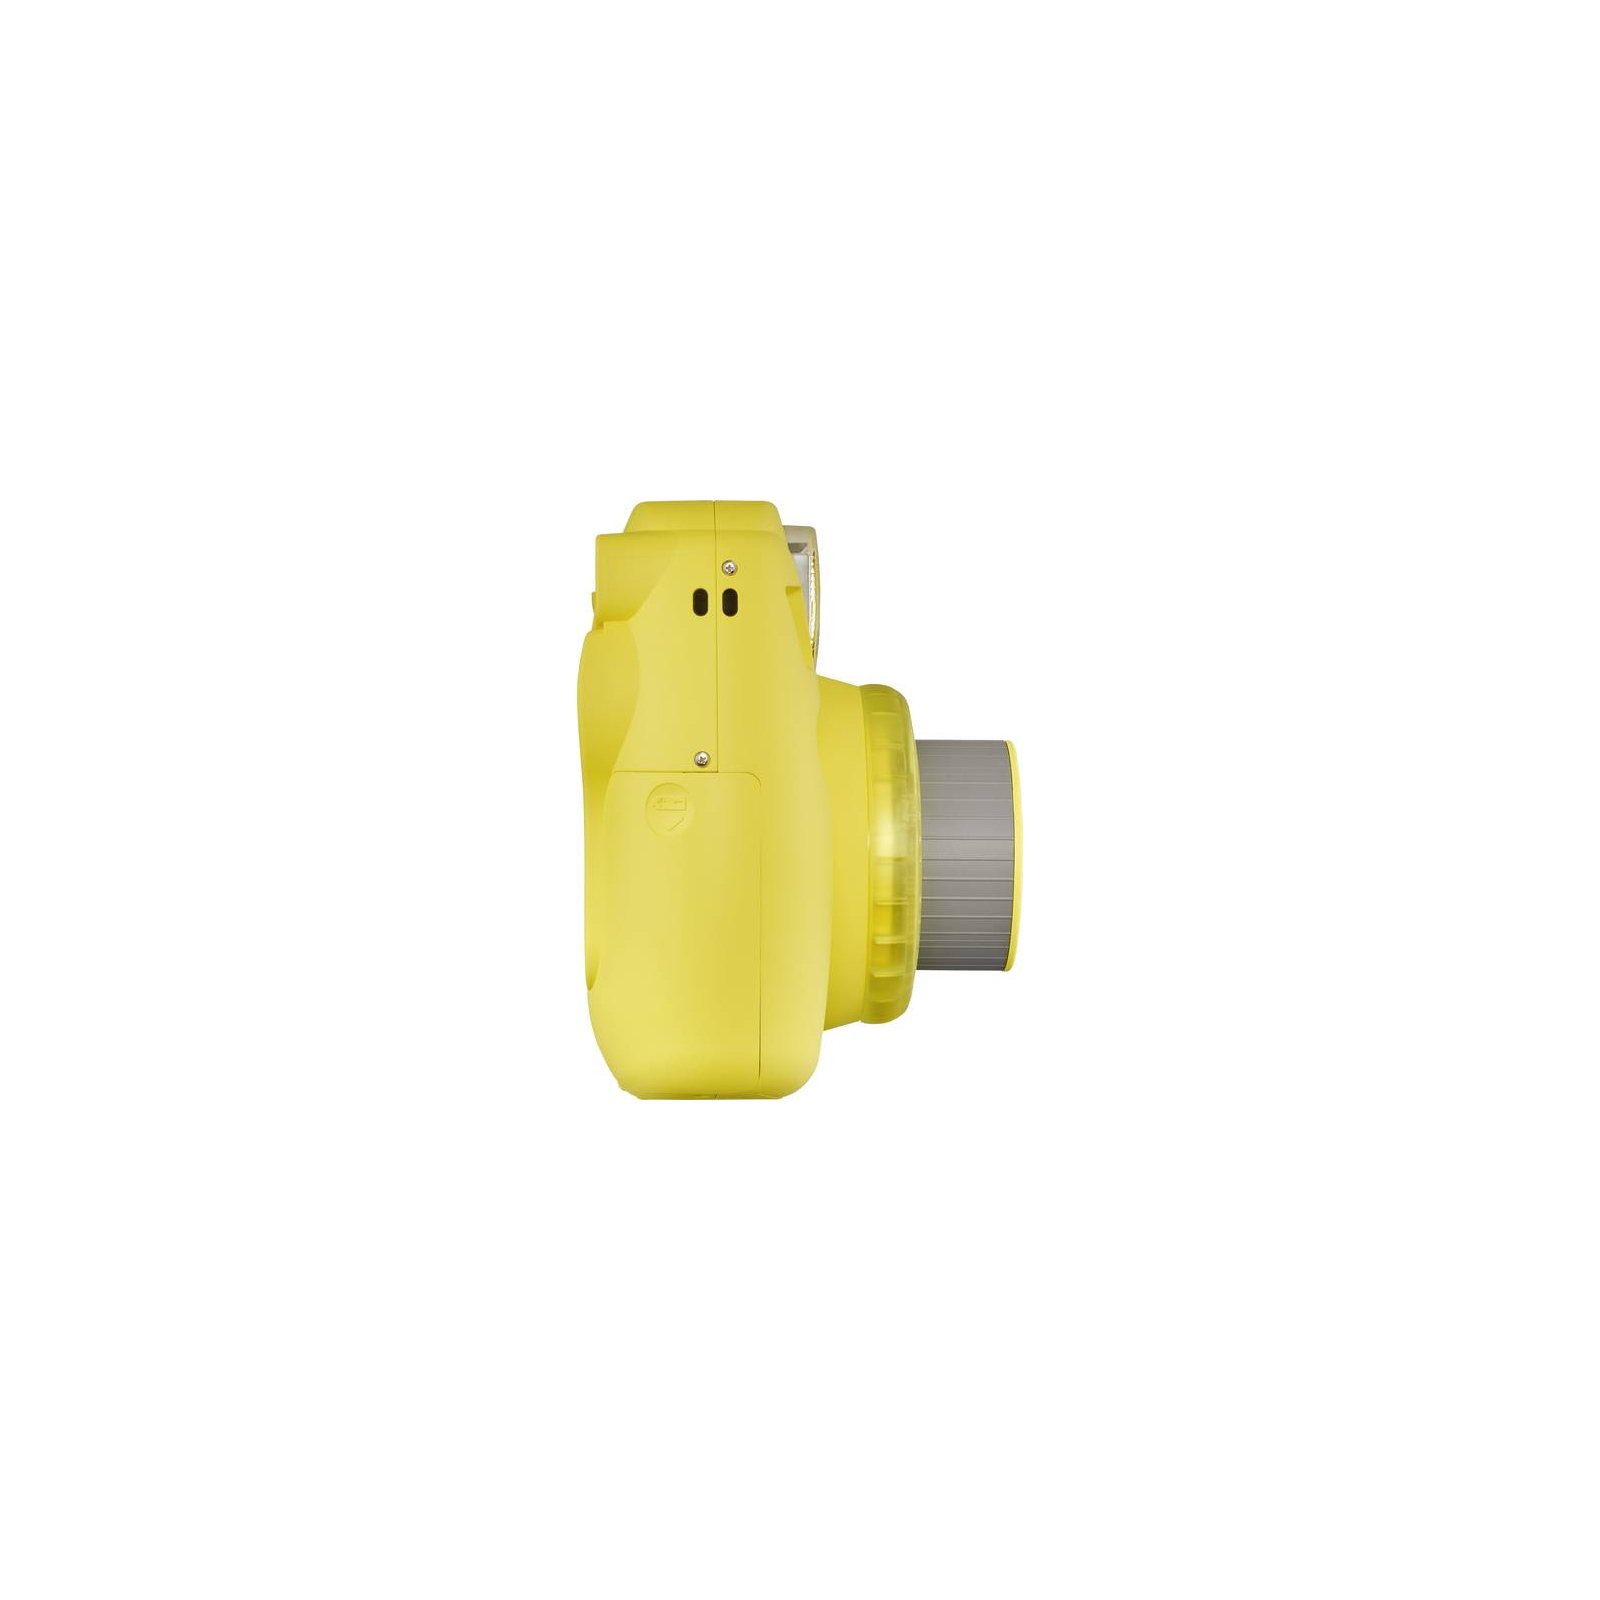 Камера моментальной печати Fujifilm INSTAX Mini 9 Yellow (16632960) изображение 2